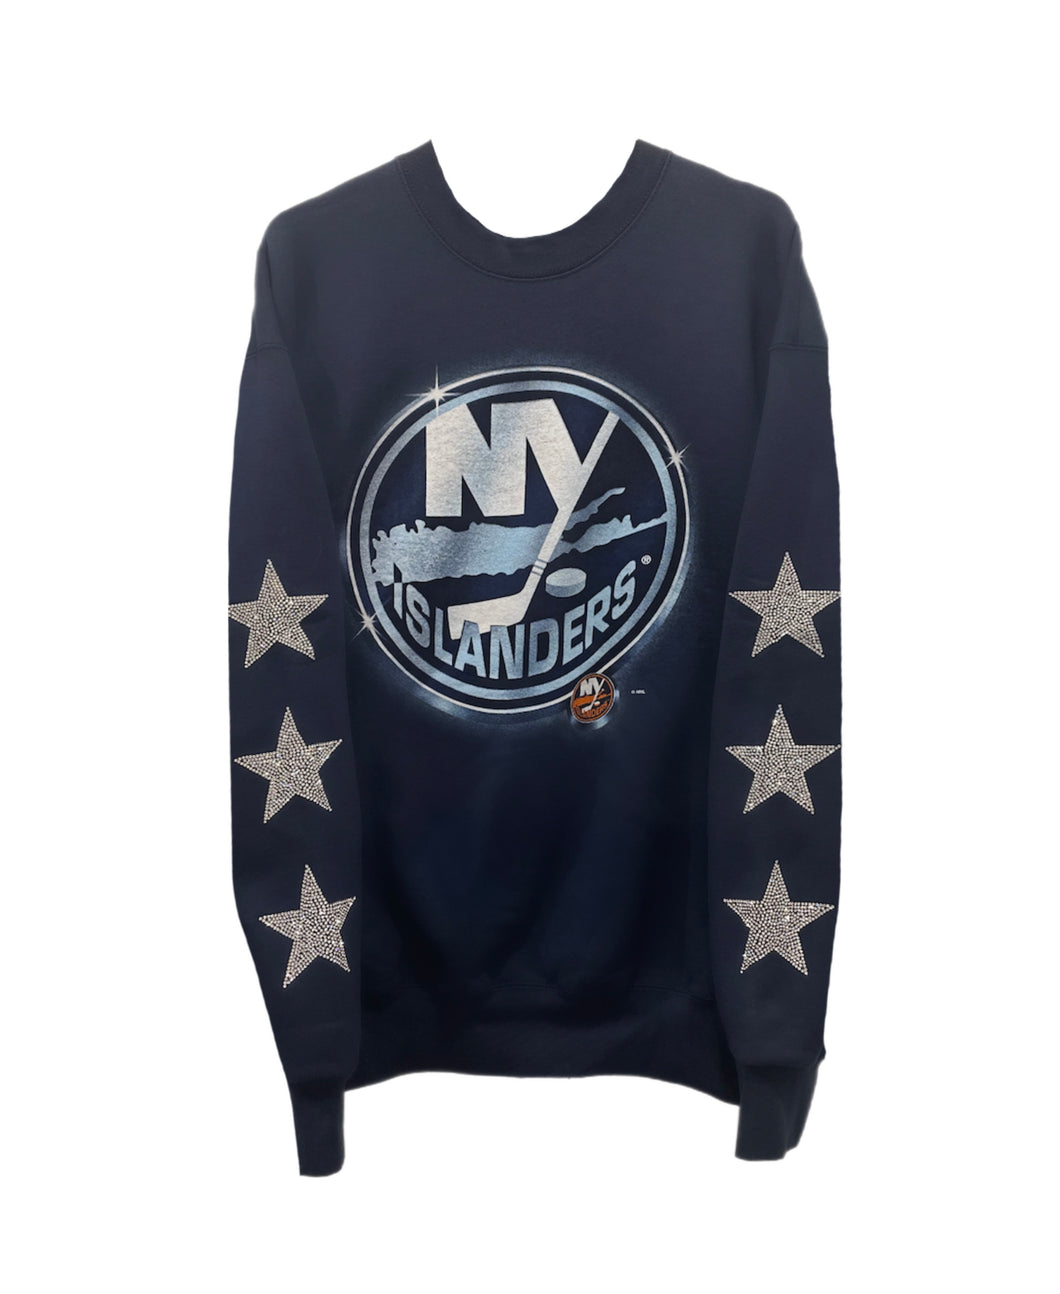 NY Islanders, NHL One of a KIND Vintage Sweatshirt with Three Crystal Star Design